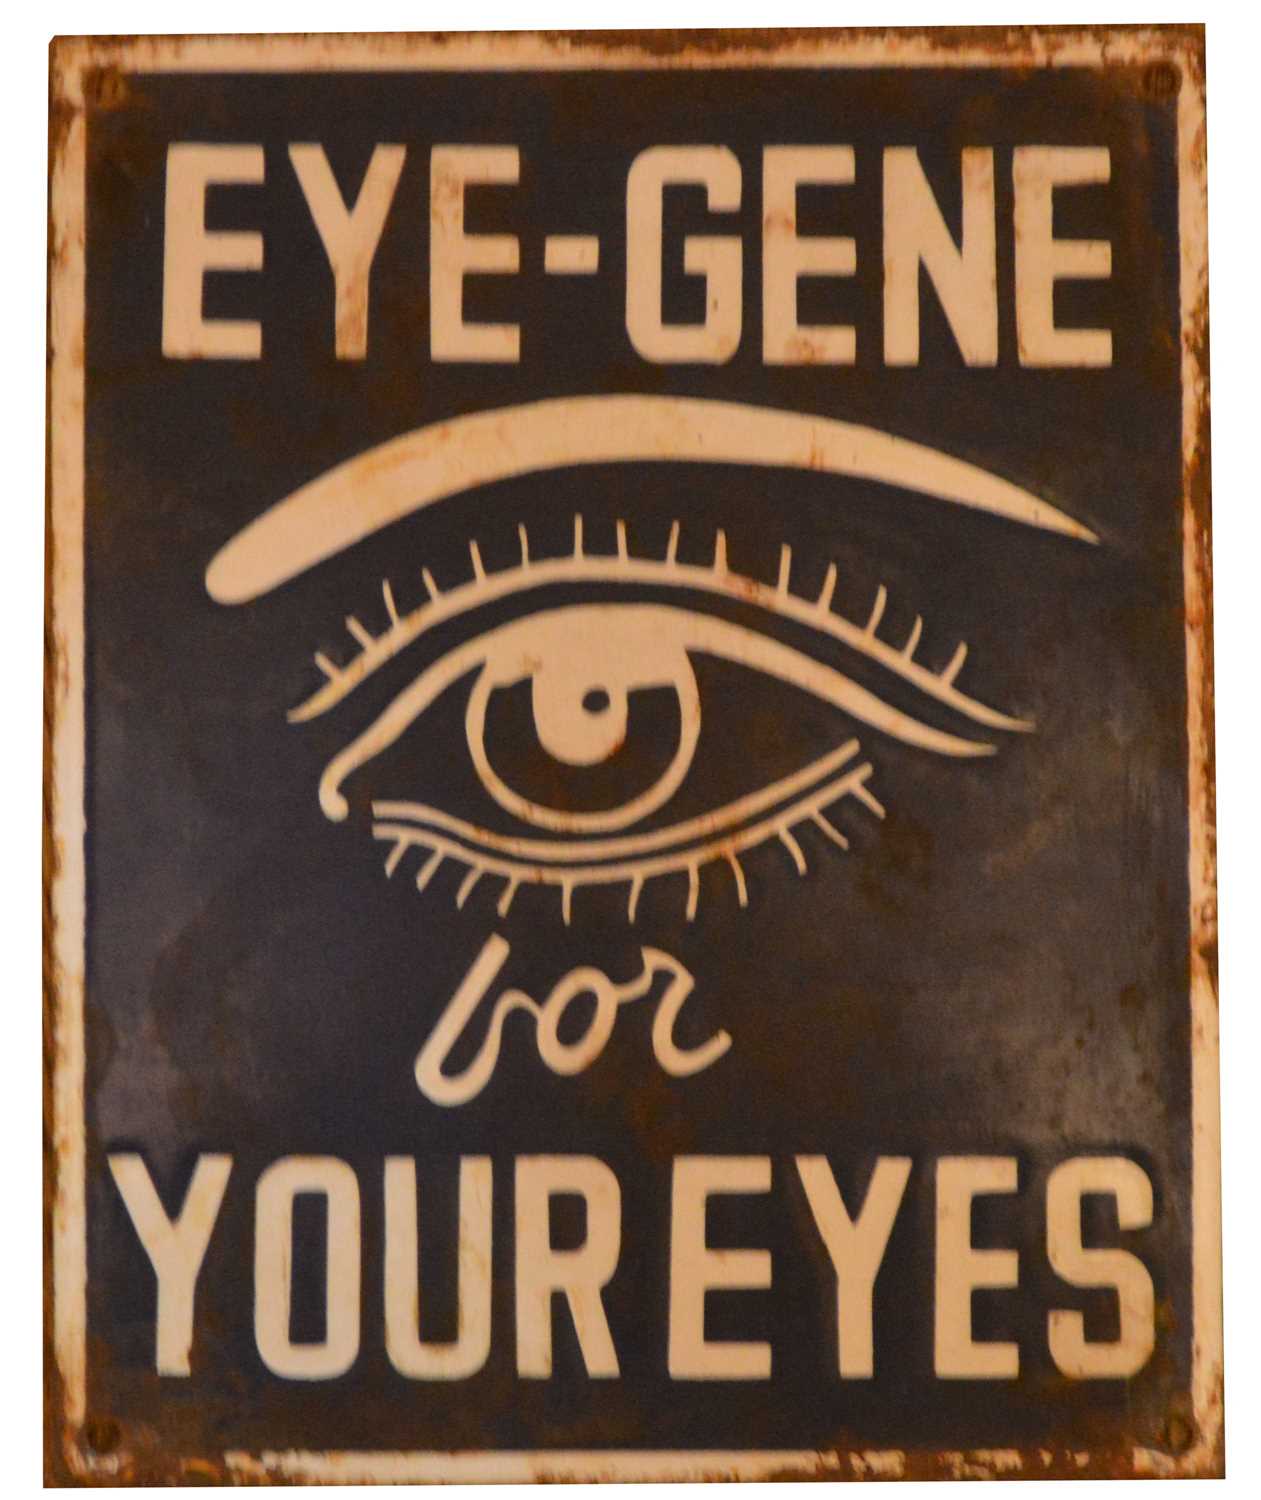 Lot 734 - Eye-Gene enamel advertising sign